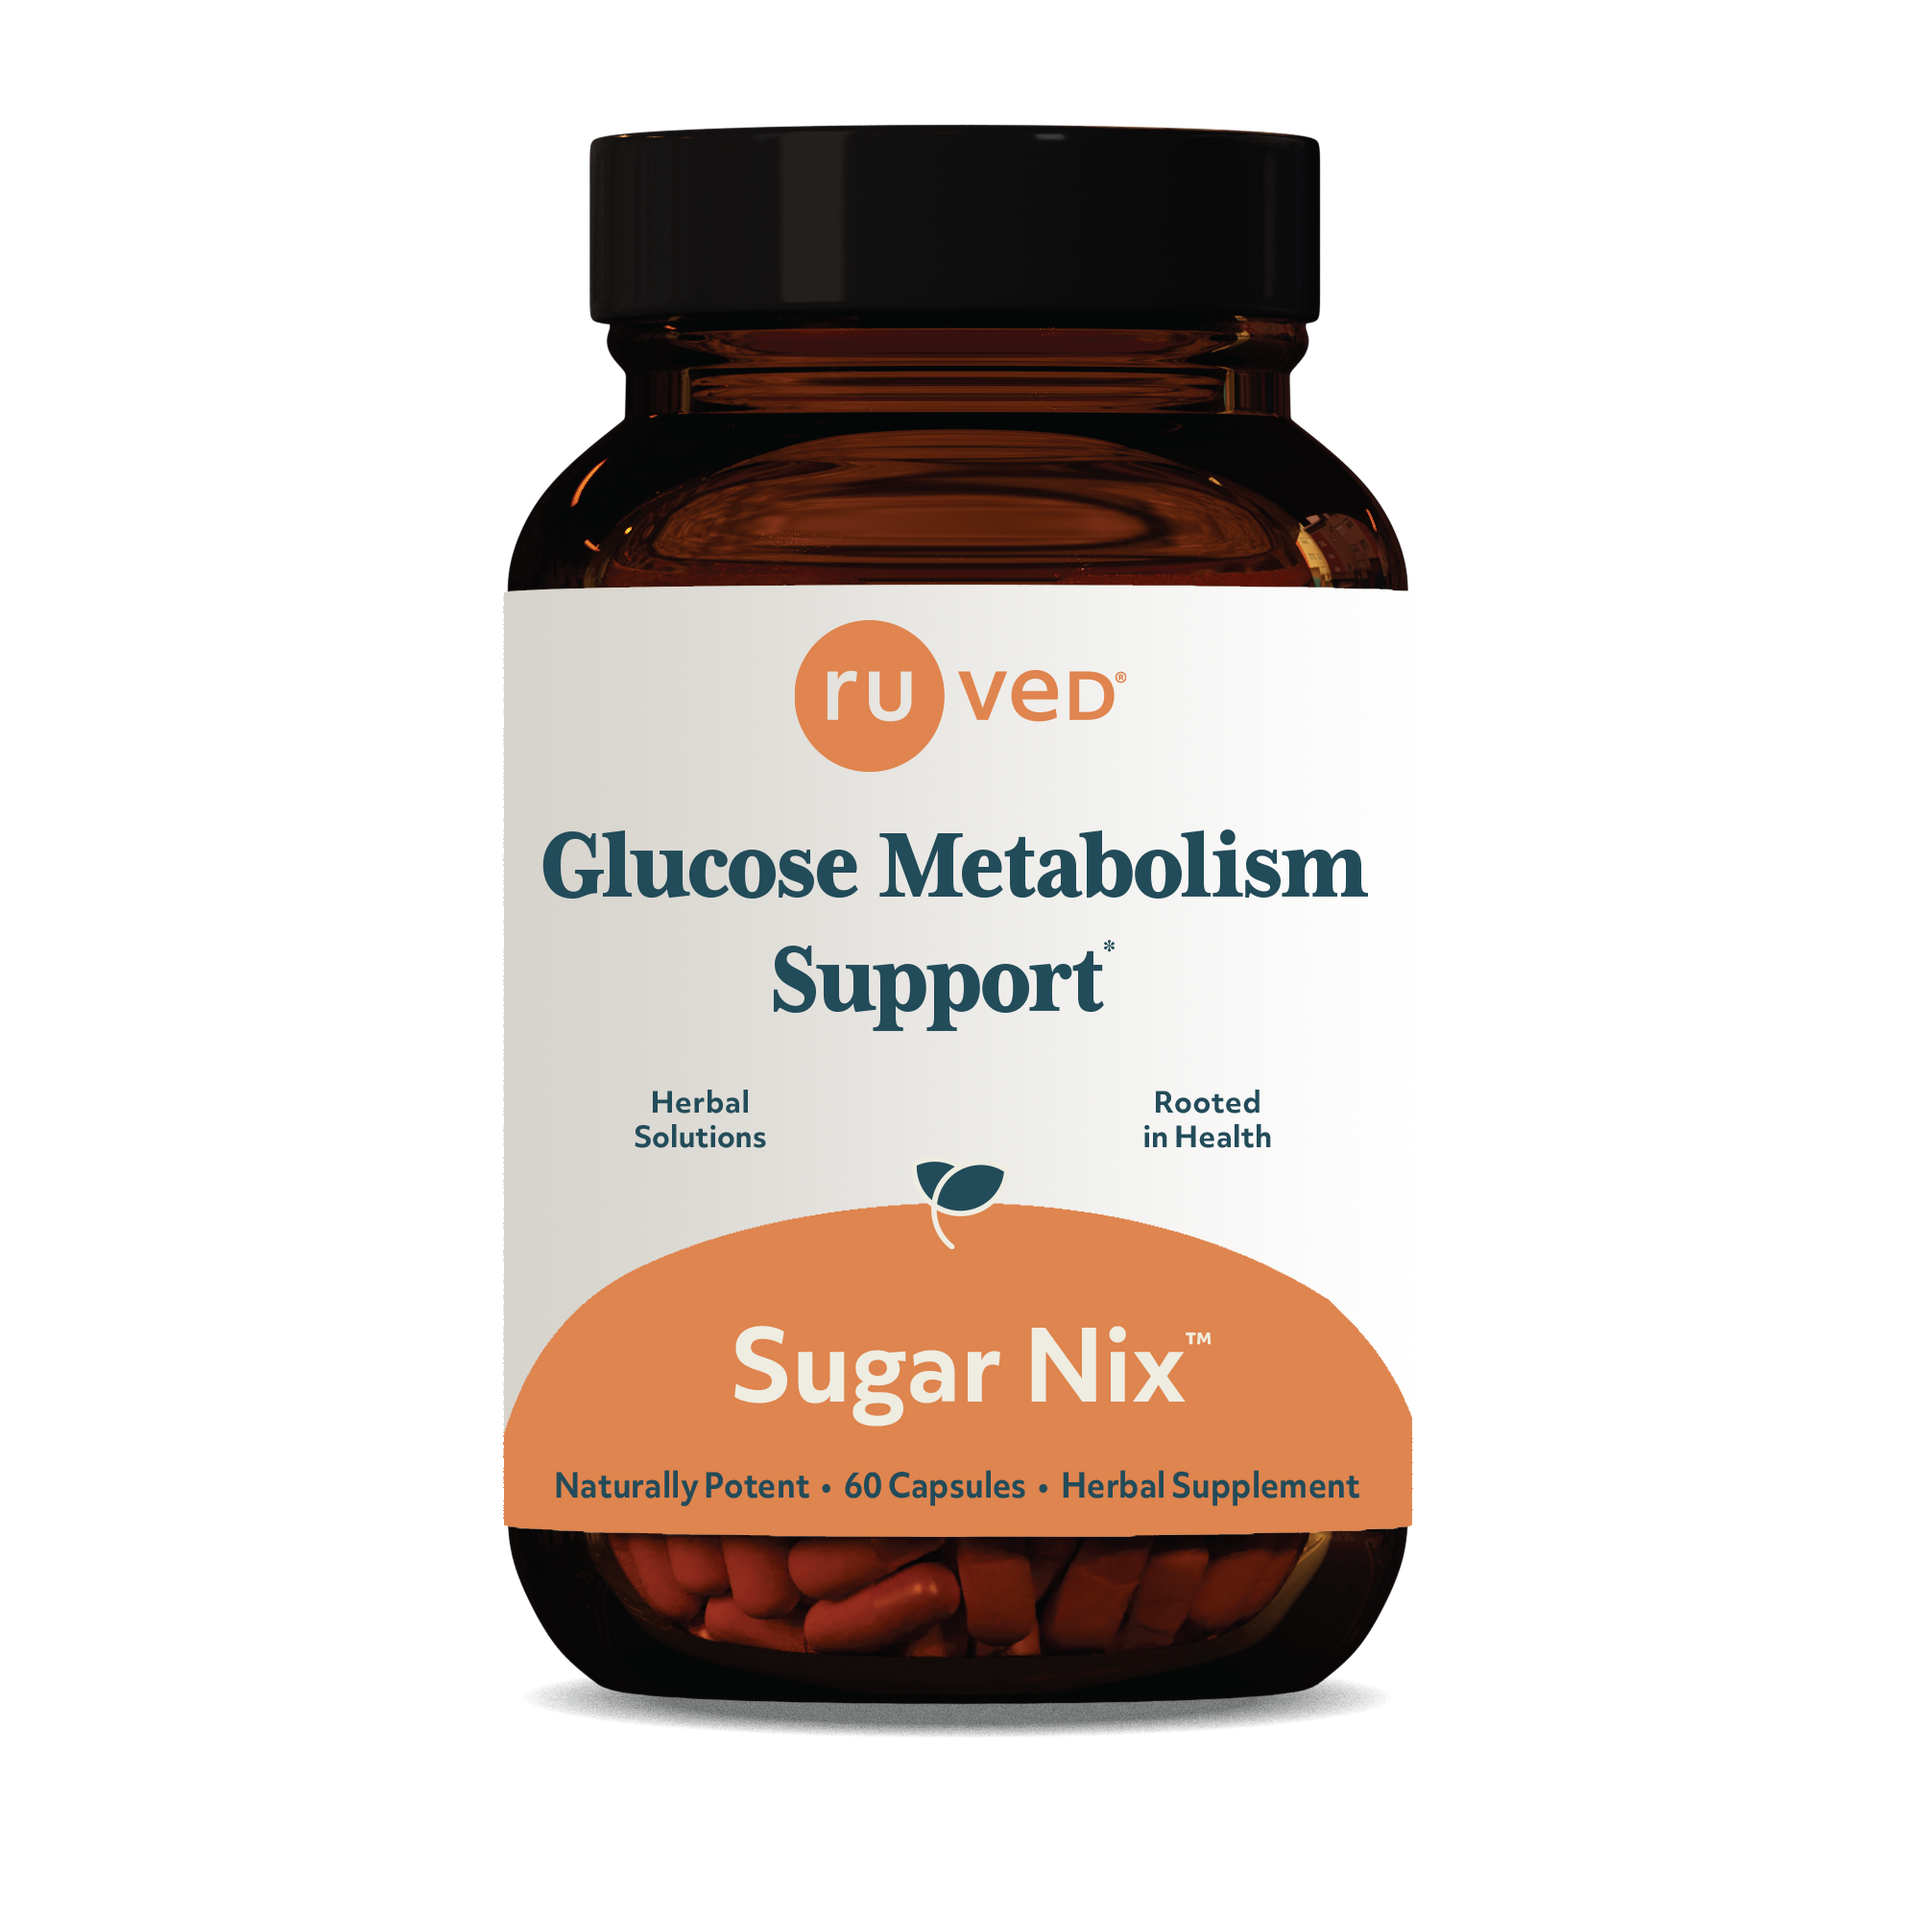 Dextrose Metabolism Support